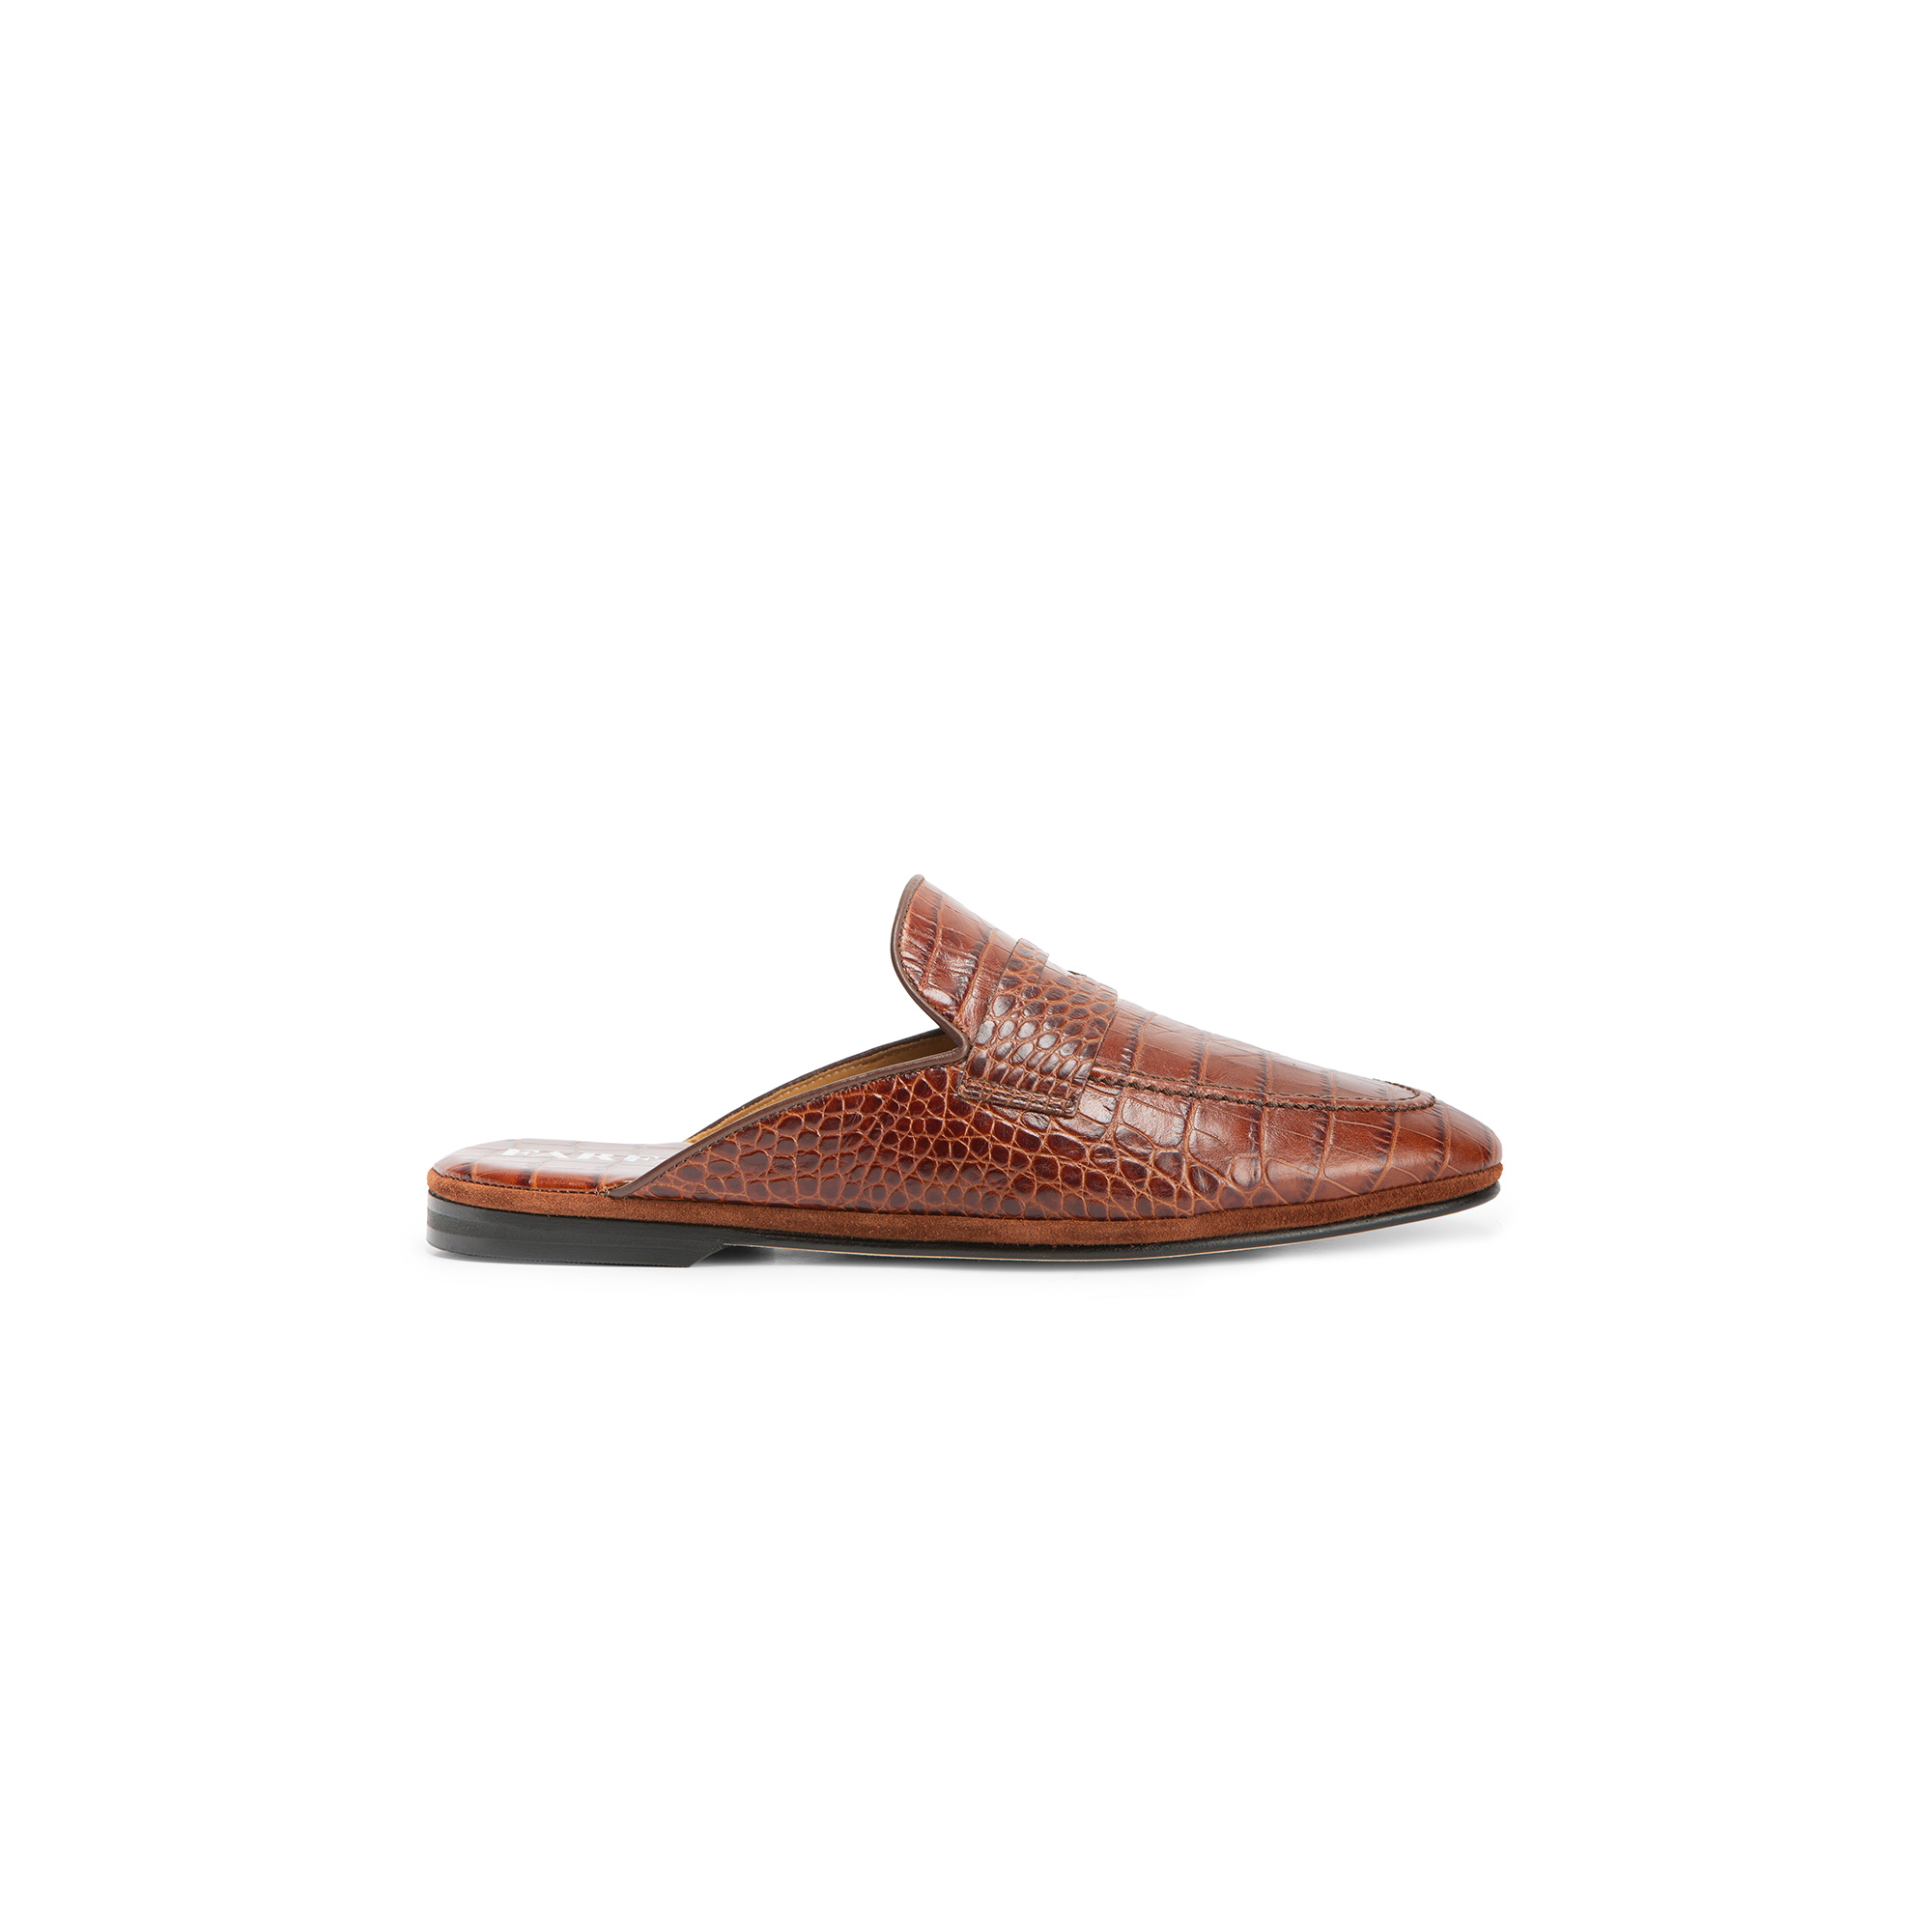 Outside open brown crocodile printed leather slipper - Farfalla italian slippers